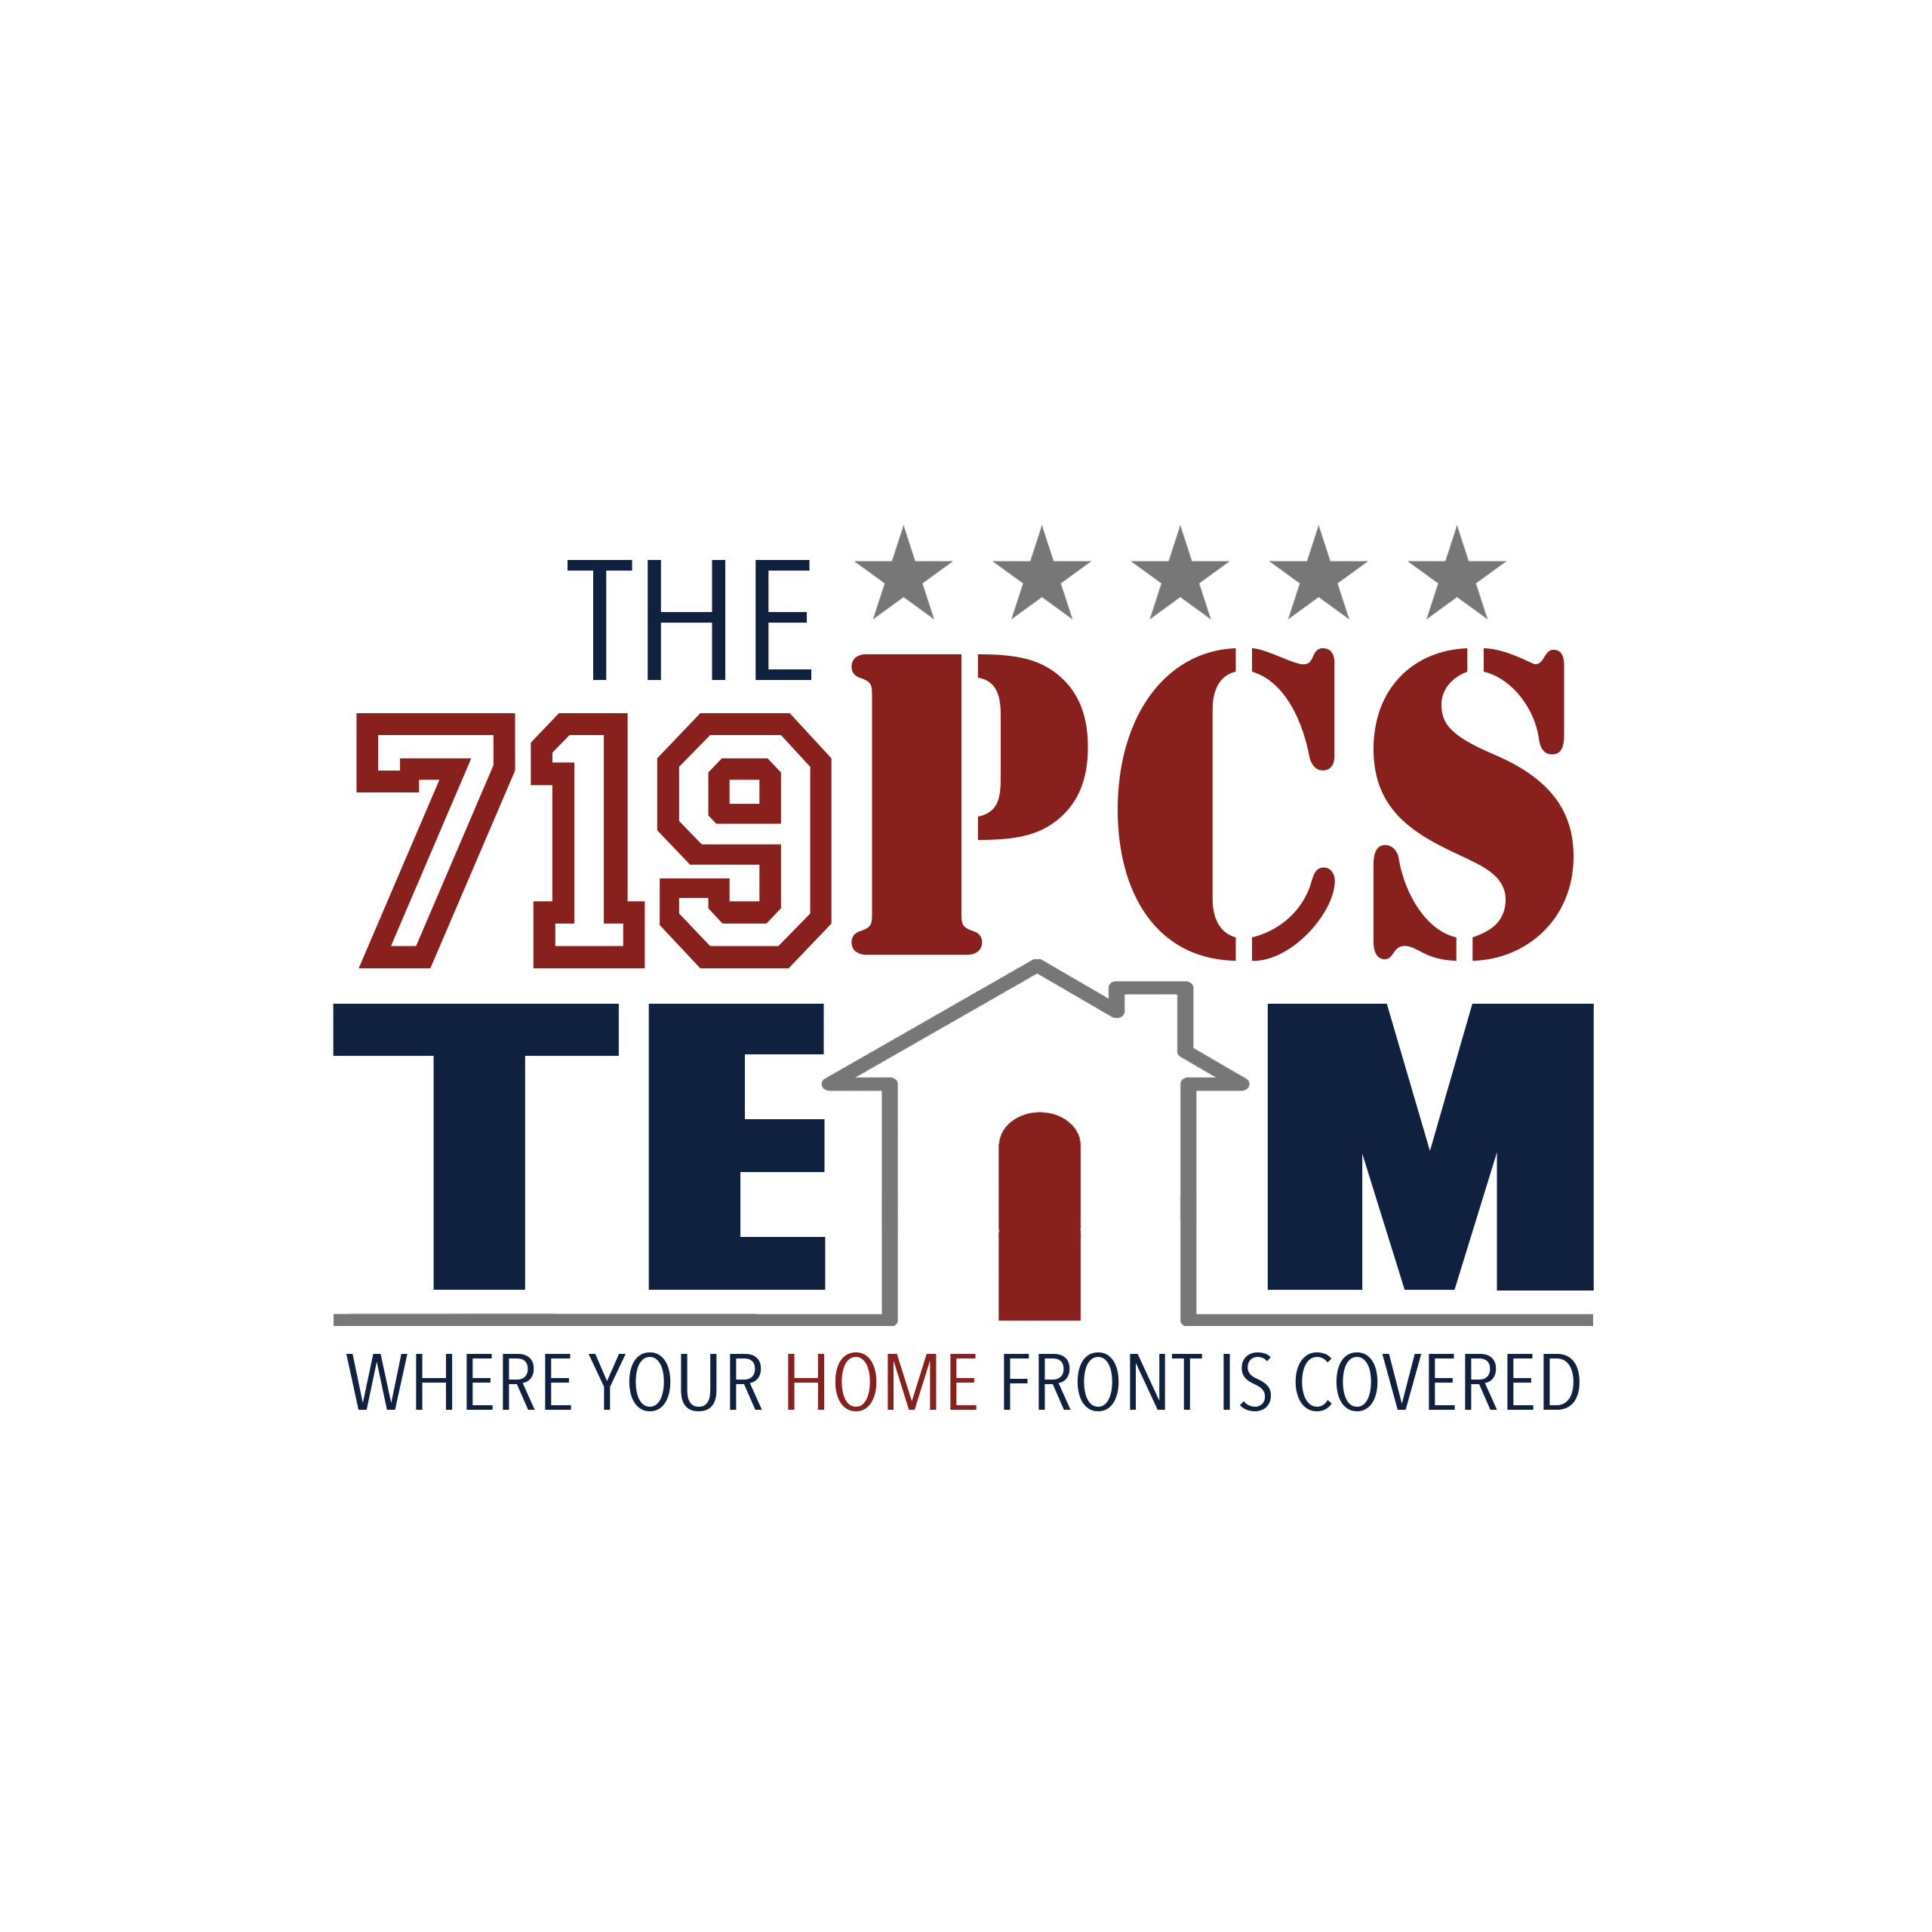 The 719 PCS Team - Keller Williams Partners reviews | 6140 TUTT Blvd. #100 - Colorado Springs CO